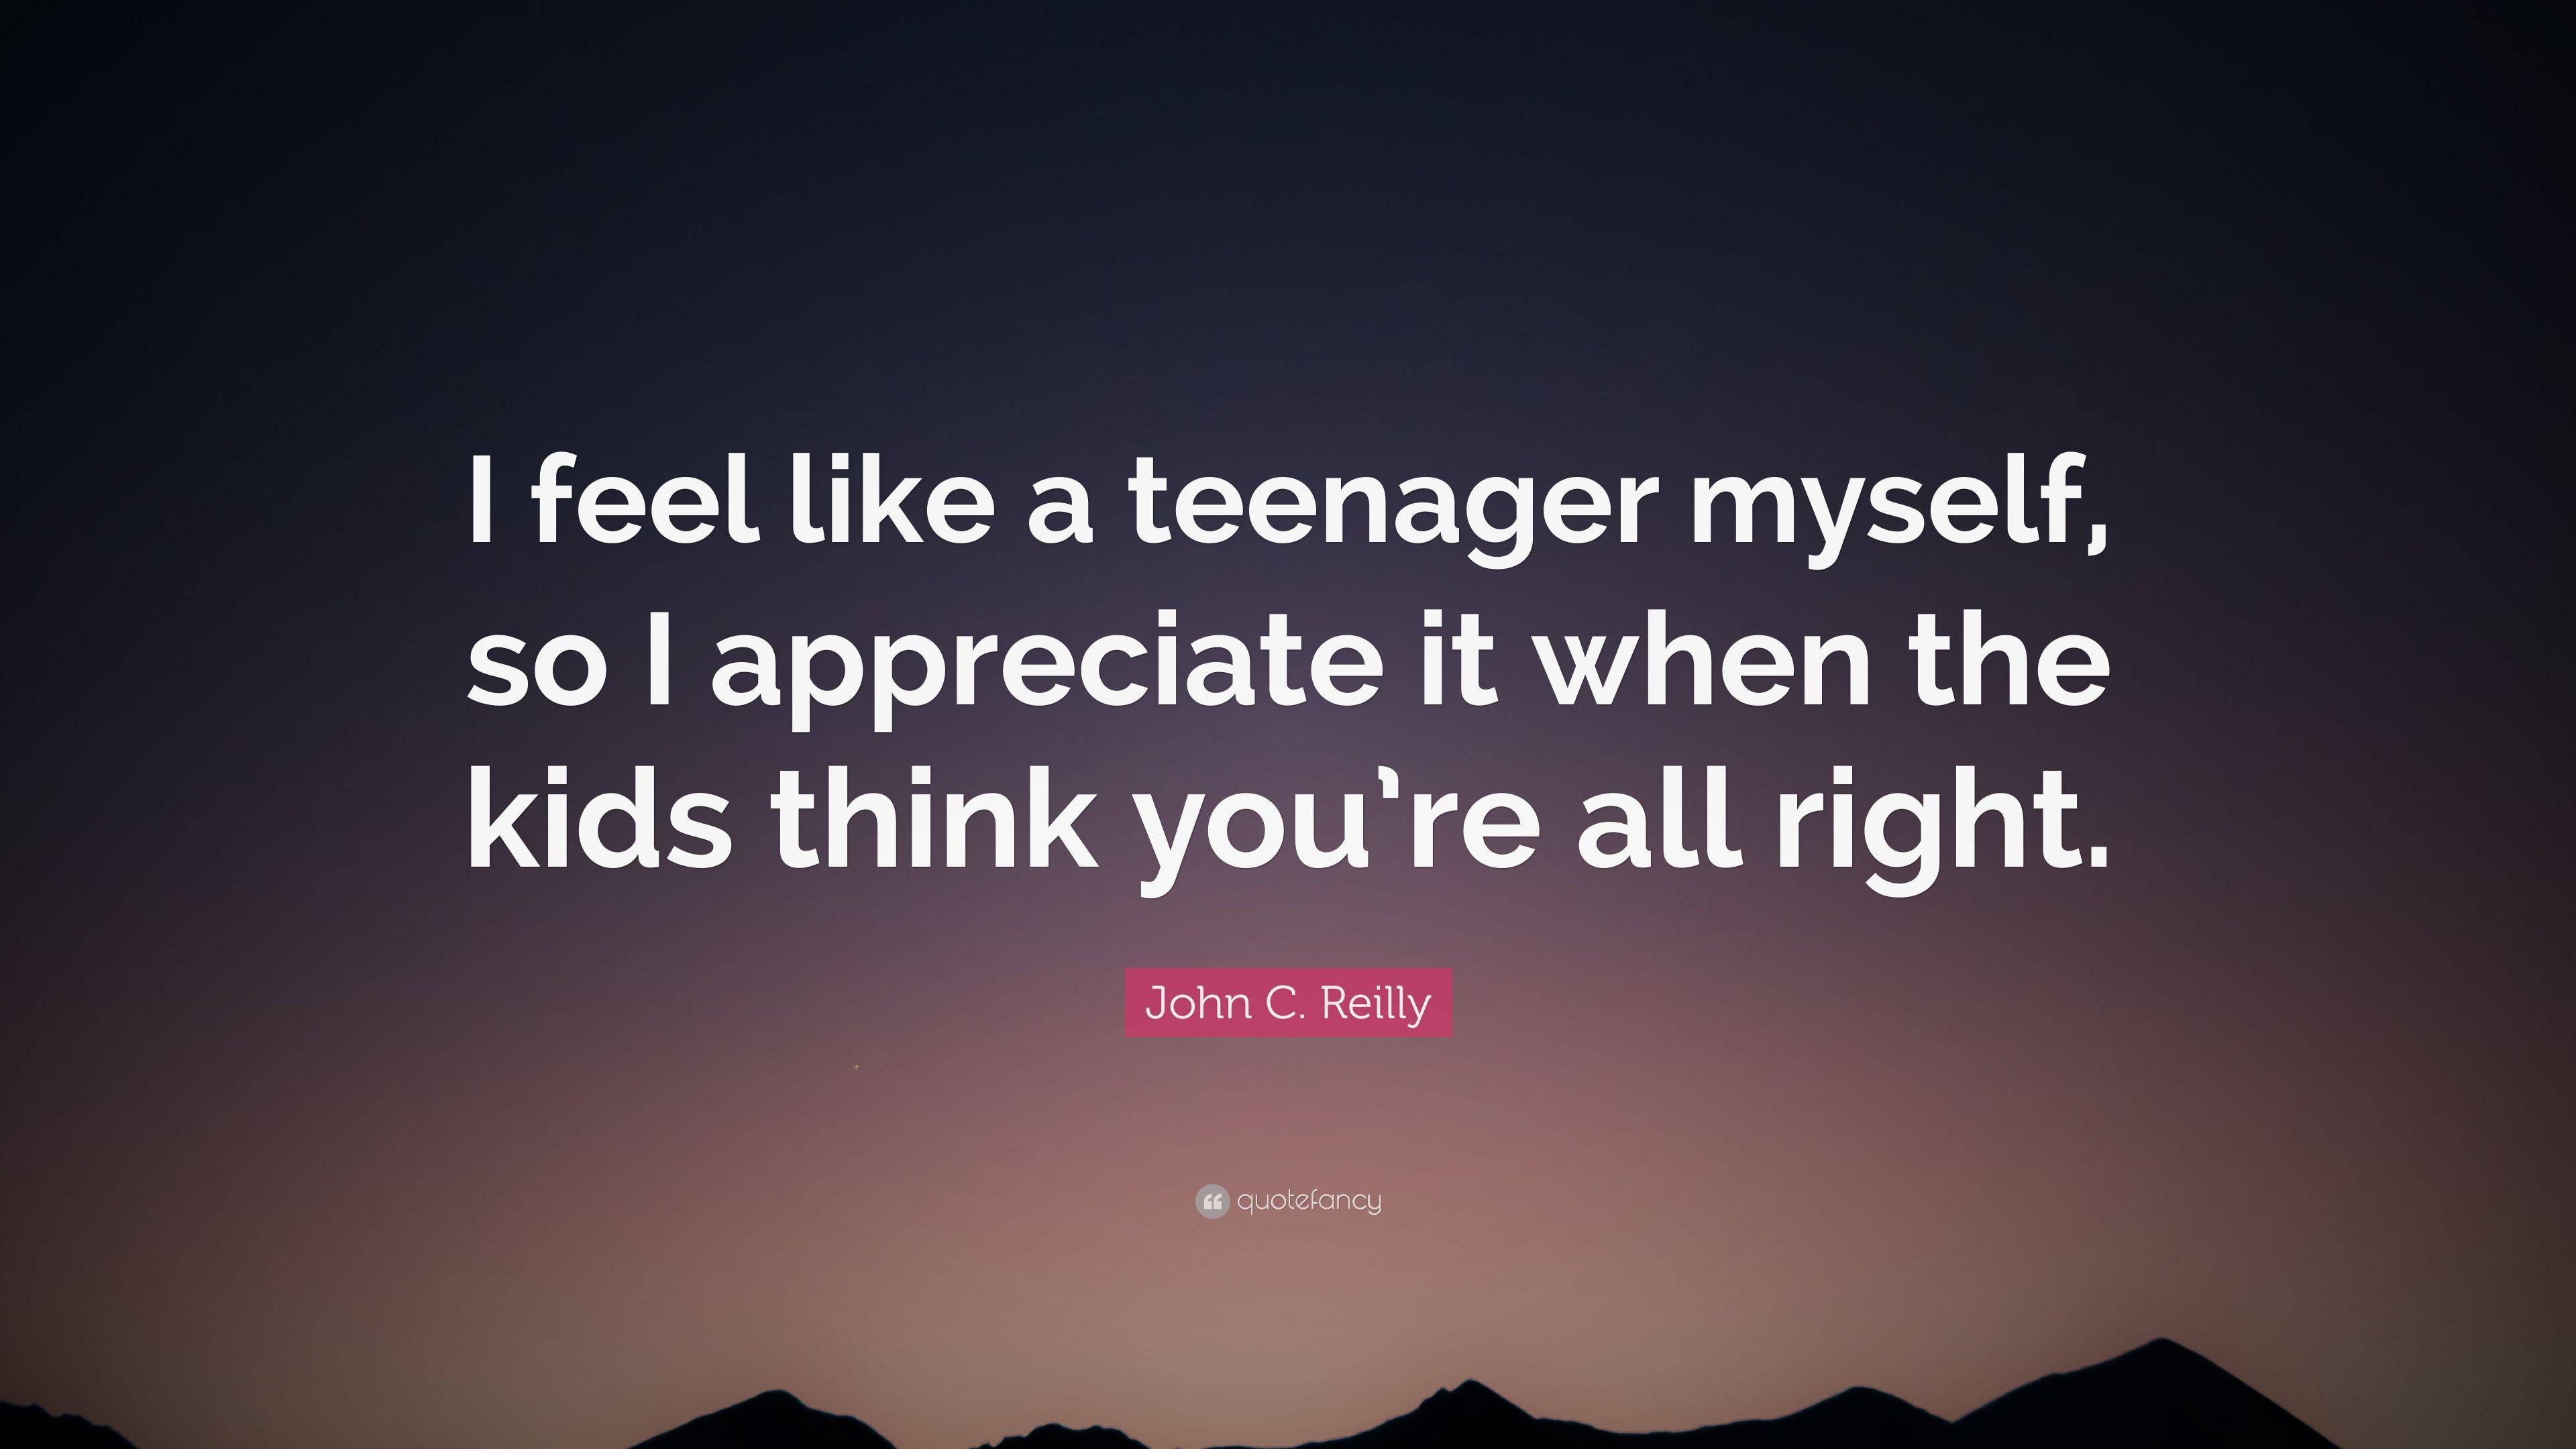 John C. Reilly Quote: “I feel like a teenager myself, so I